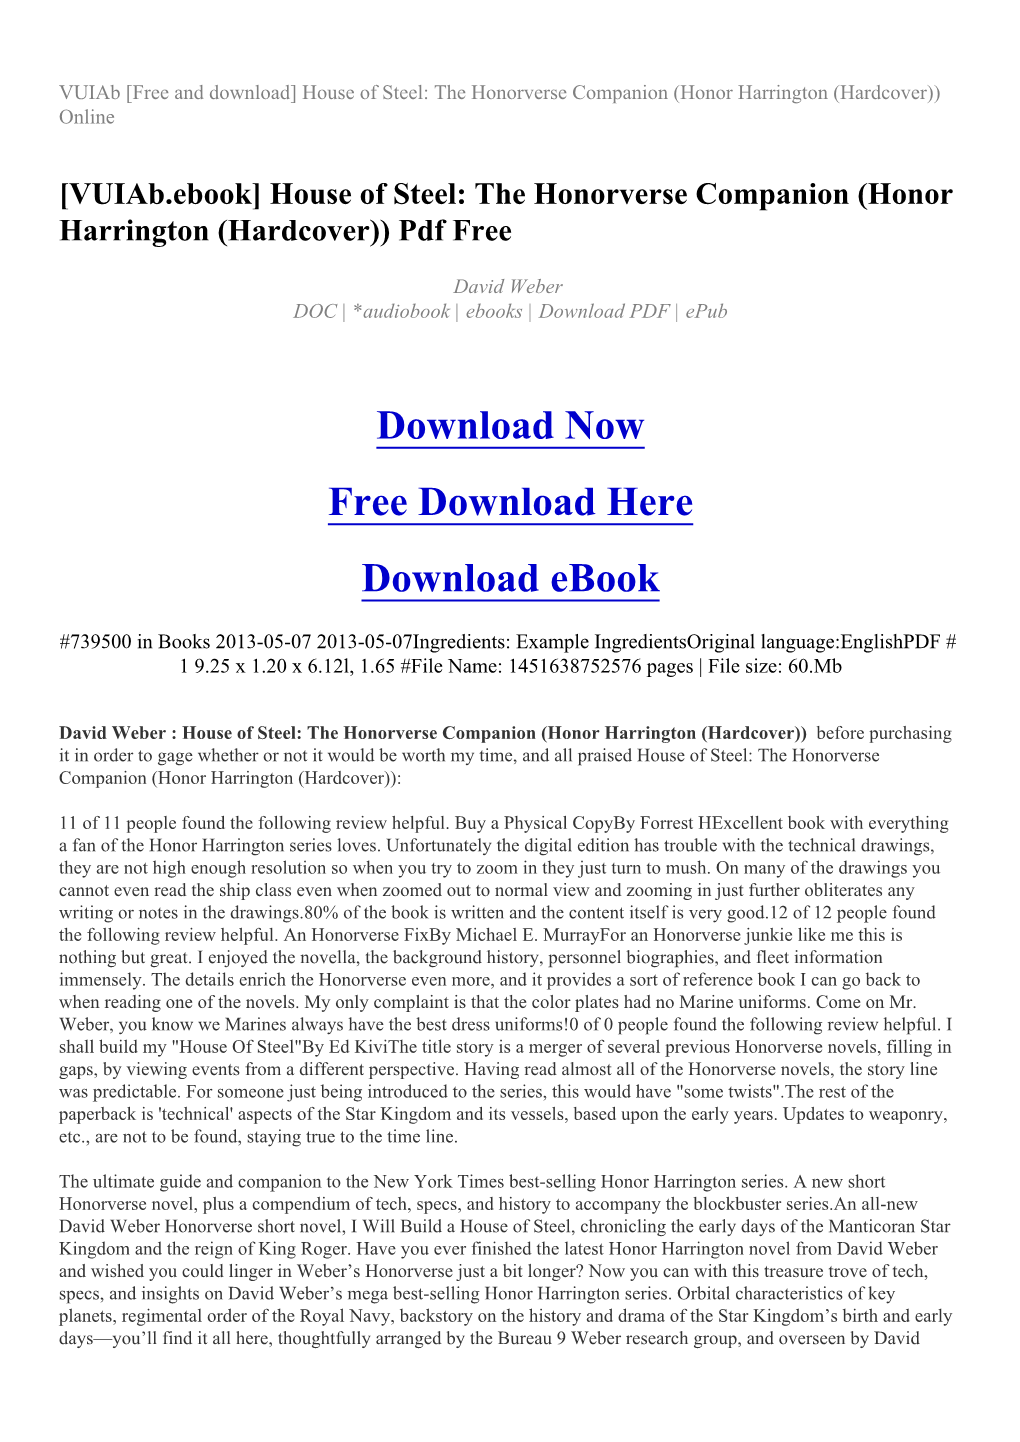 The Honorverse Companion (Honor Harrington (Hardcover)) Online